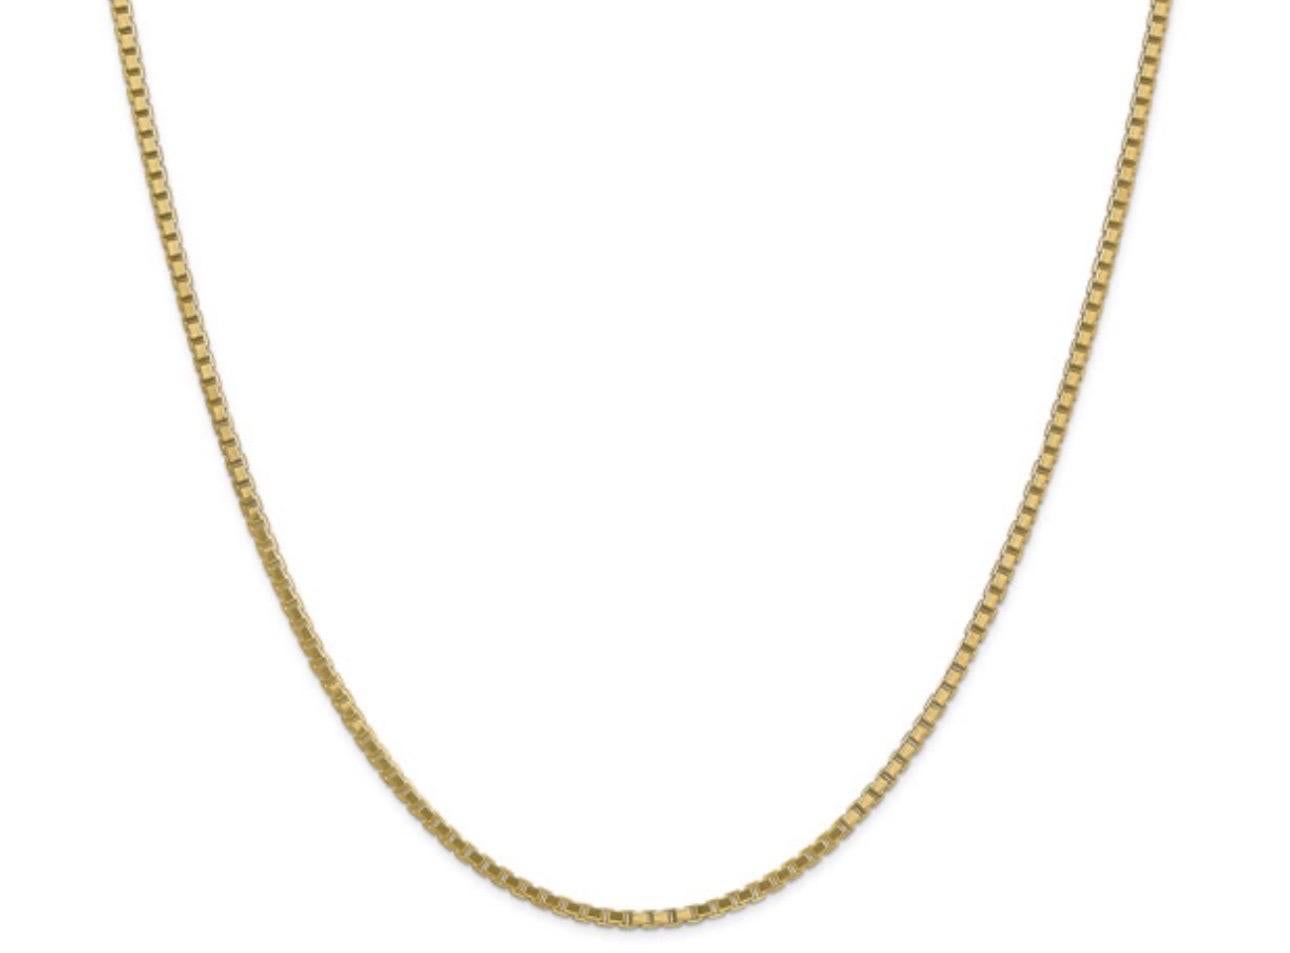 Vintage 14 Karat Yellow Gold 7.3 Gm, Box Chain Necklace, Wide 1